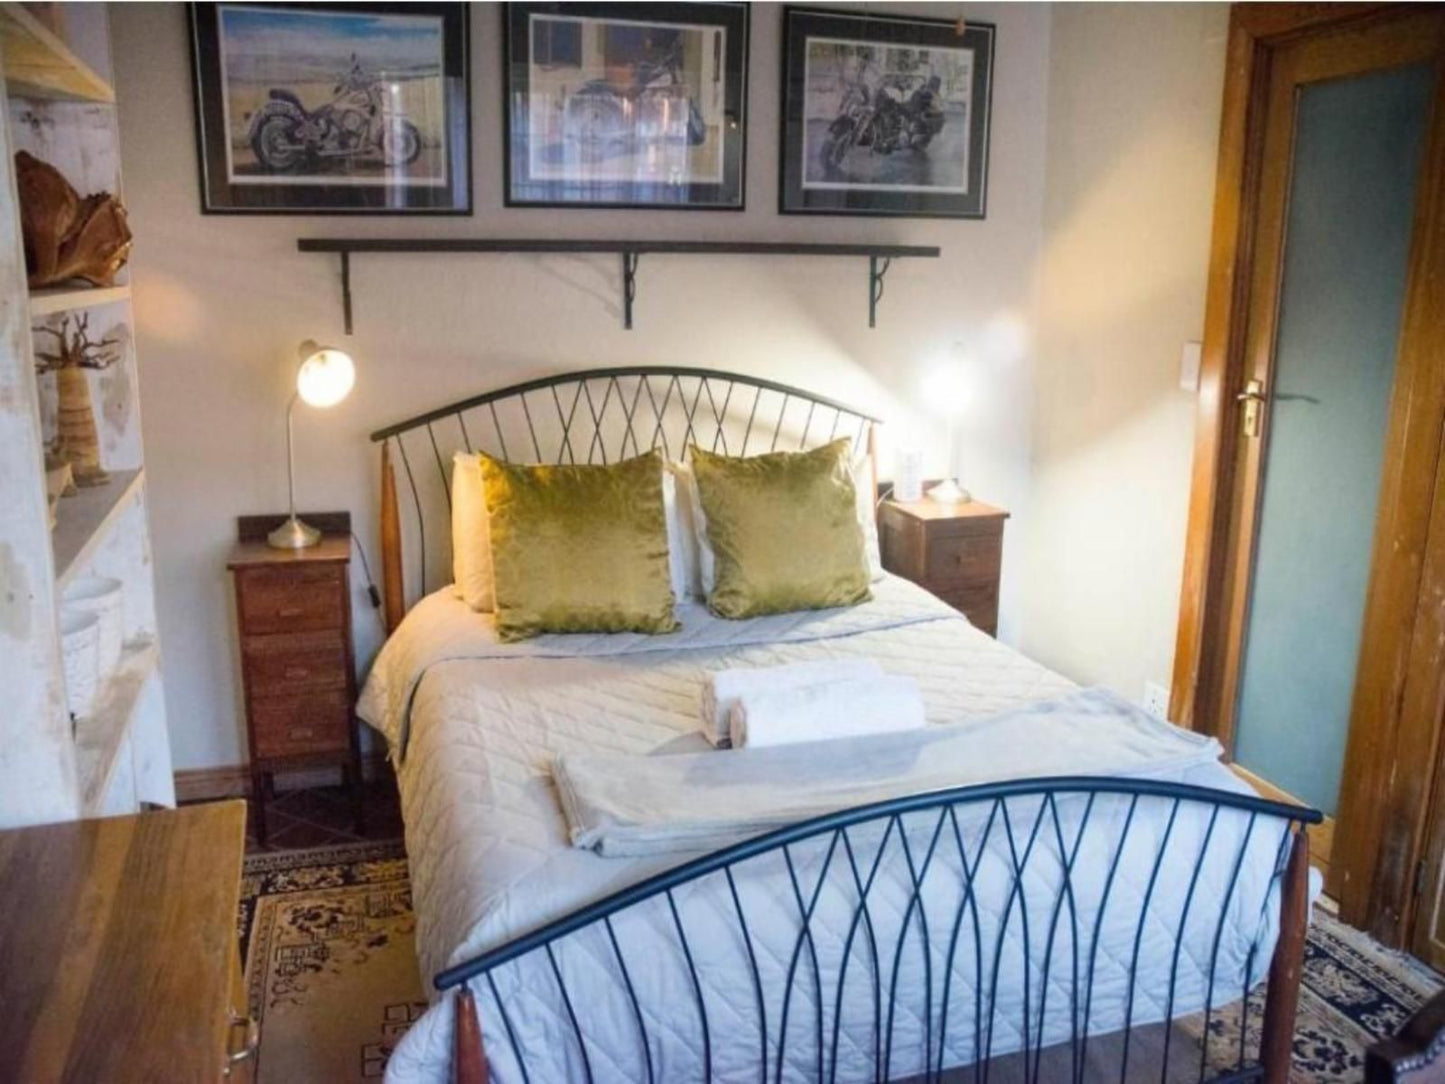 The Village In Hatfield Hatfield Pretoria Tshwane Gauteng South Africa Bedroom